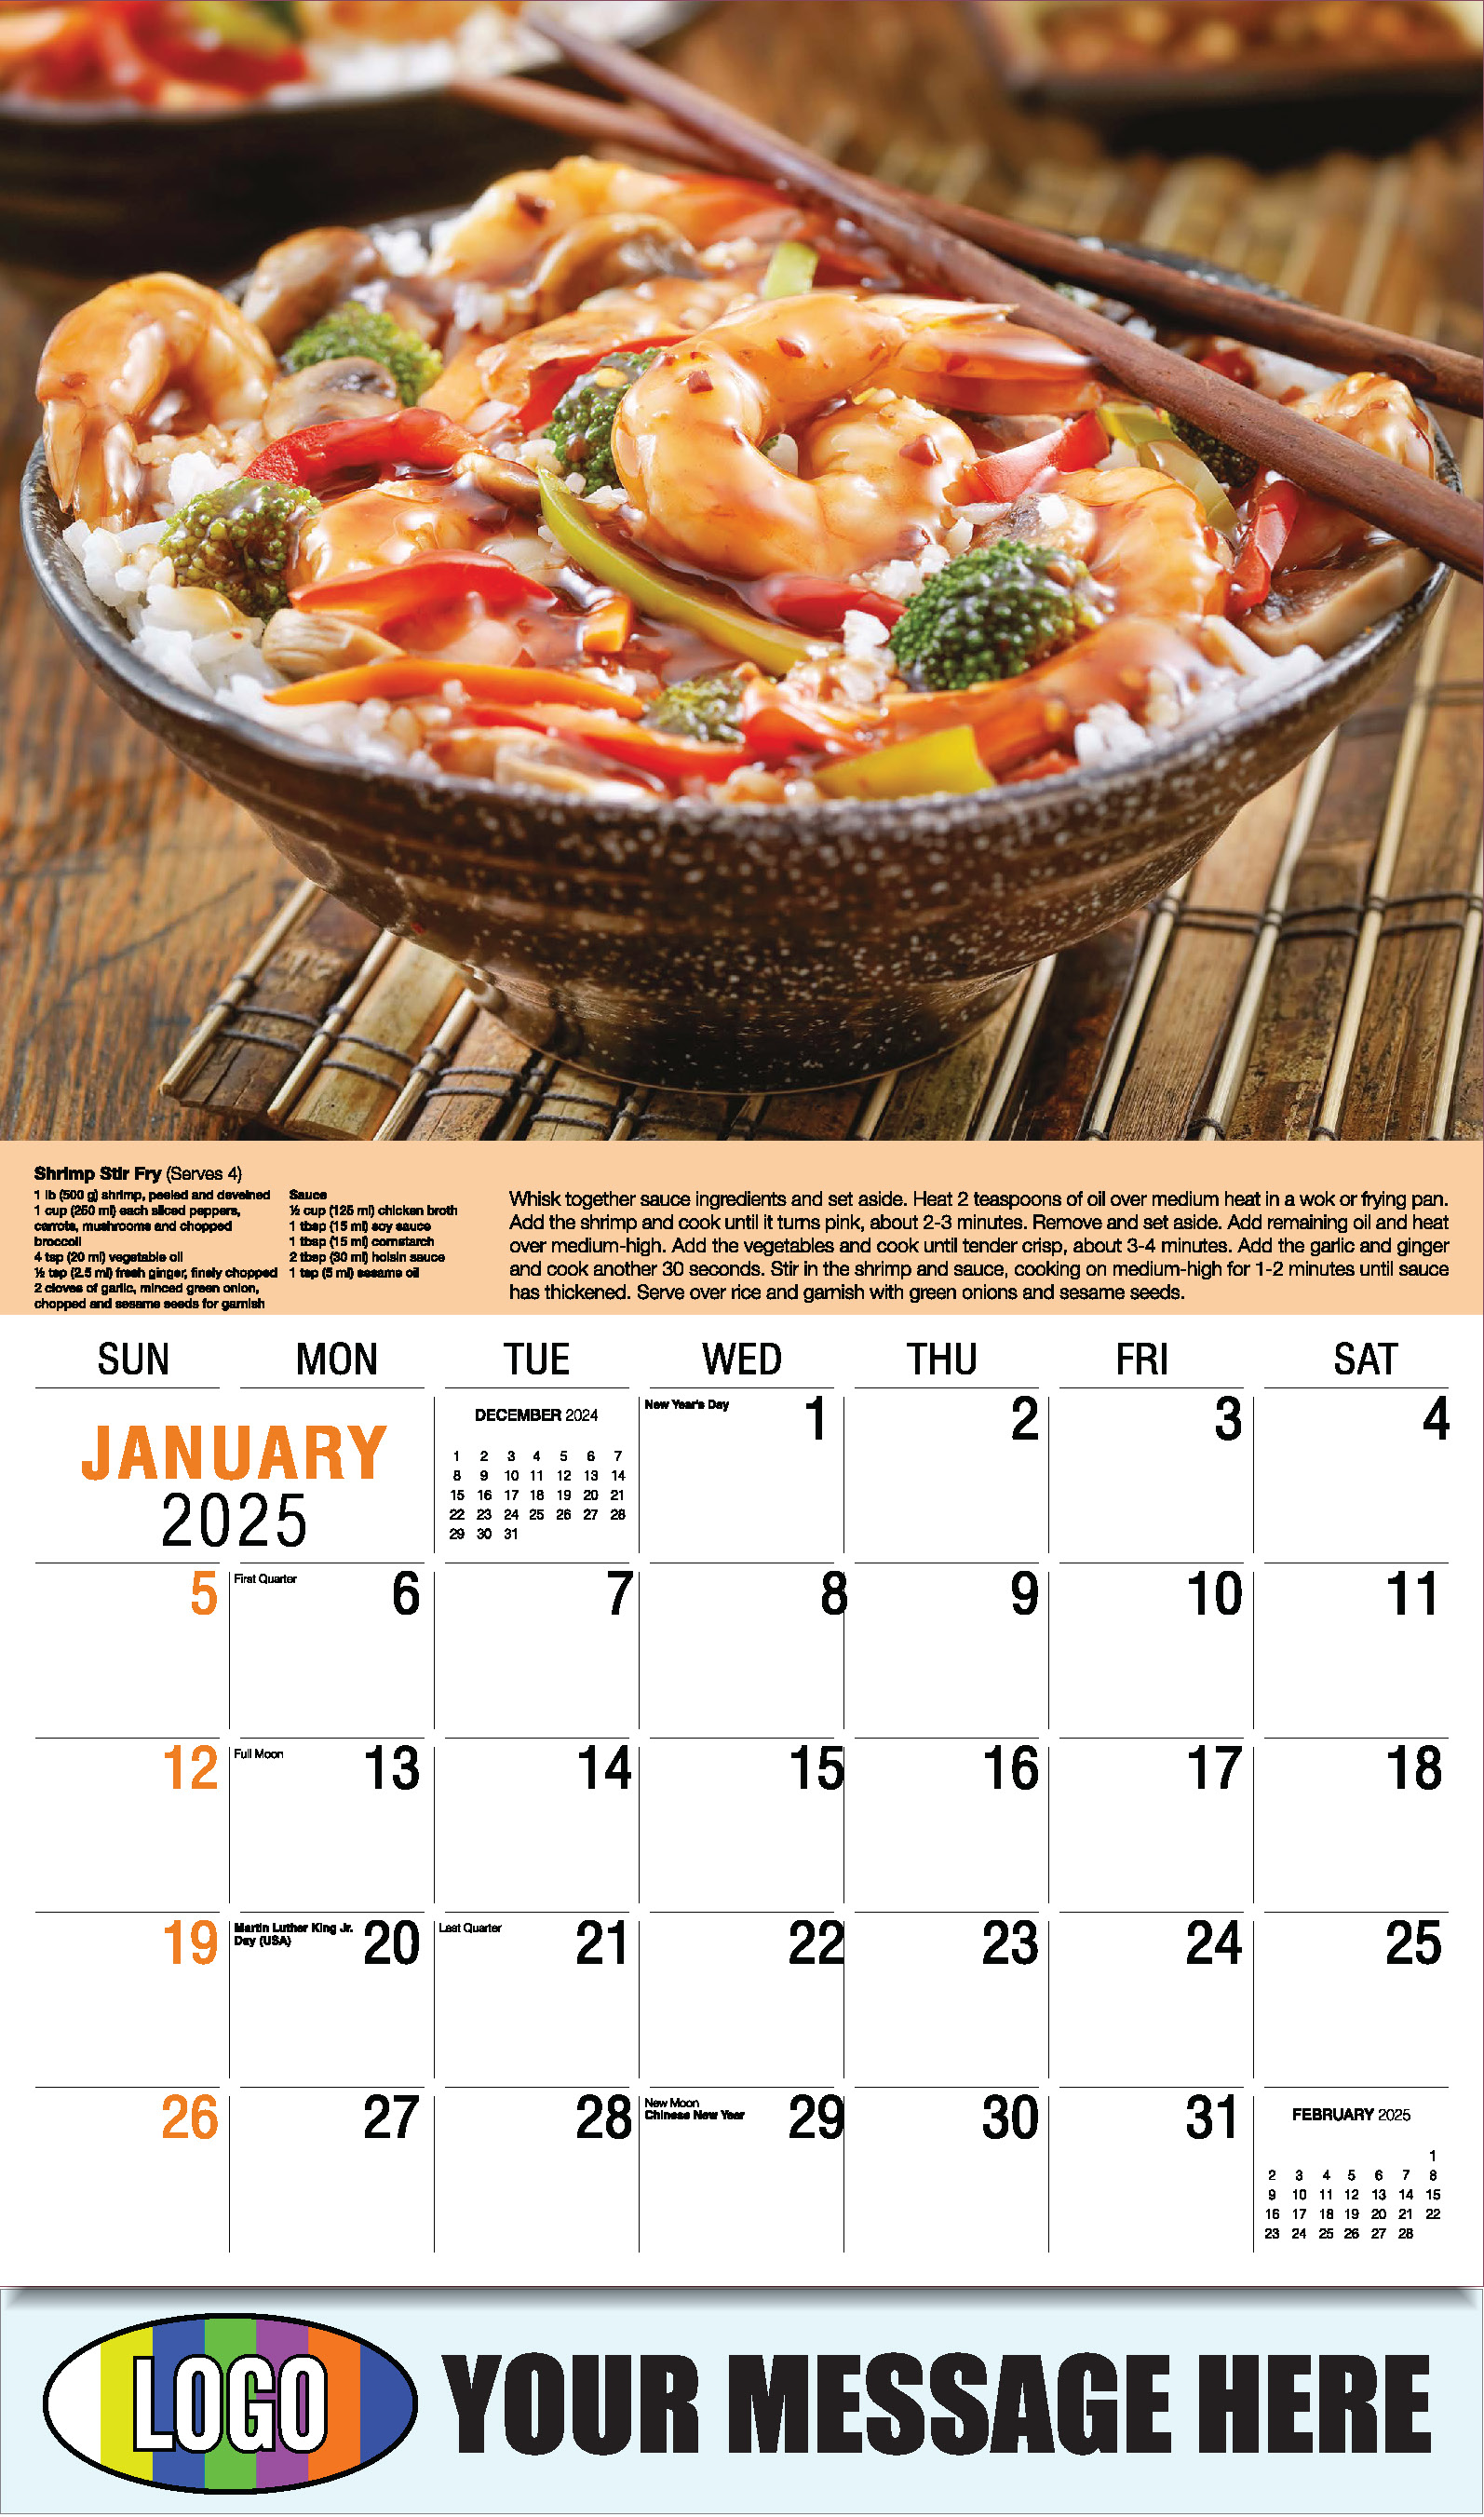 Recipes 2025 Business Promotional Calendar - January